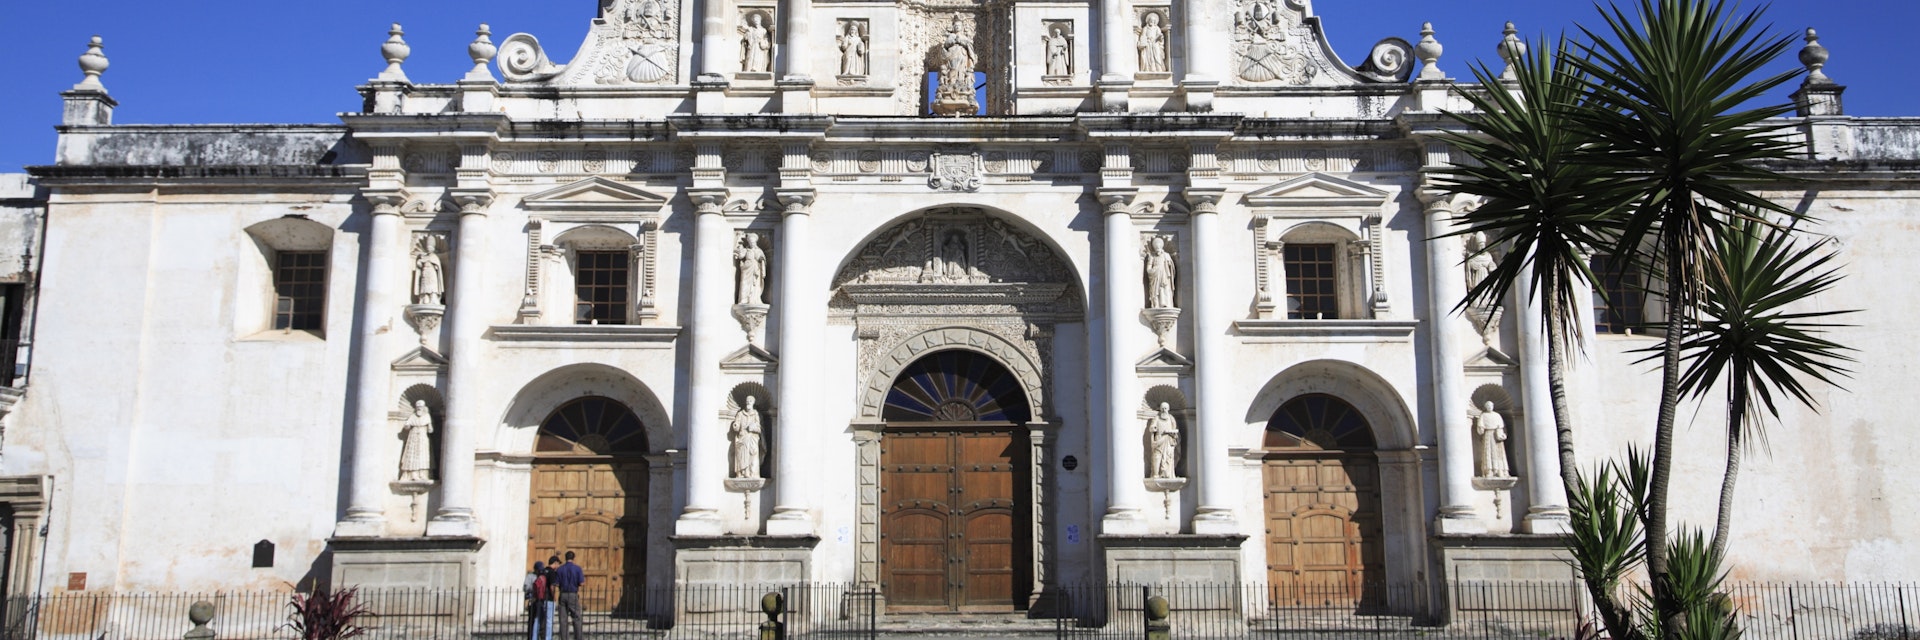 Catedral de Santiago (Santiago Cathedral), Antigua, UNESCO World Heritage Site, Guatemala, Central America